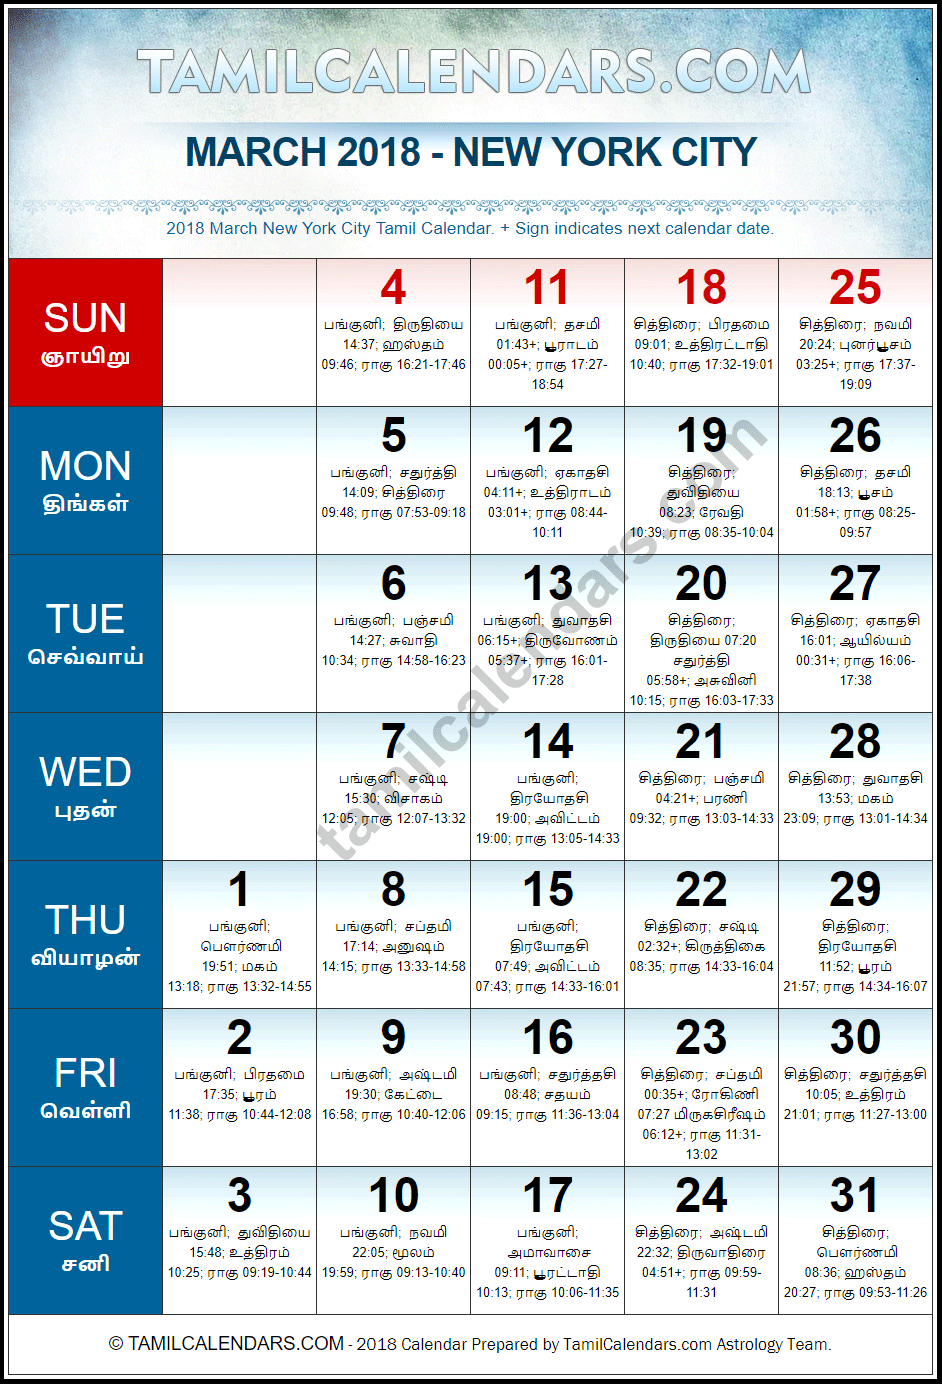 March 2018 Tamil Calendar for New York, USA